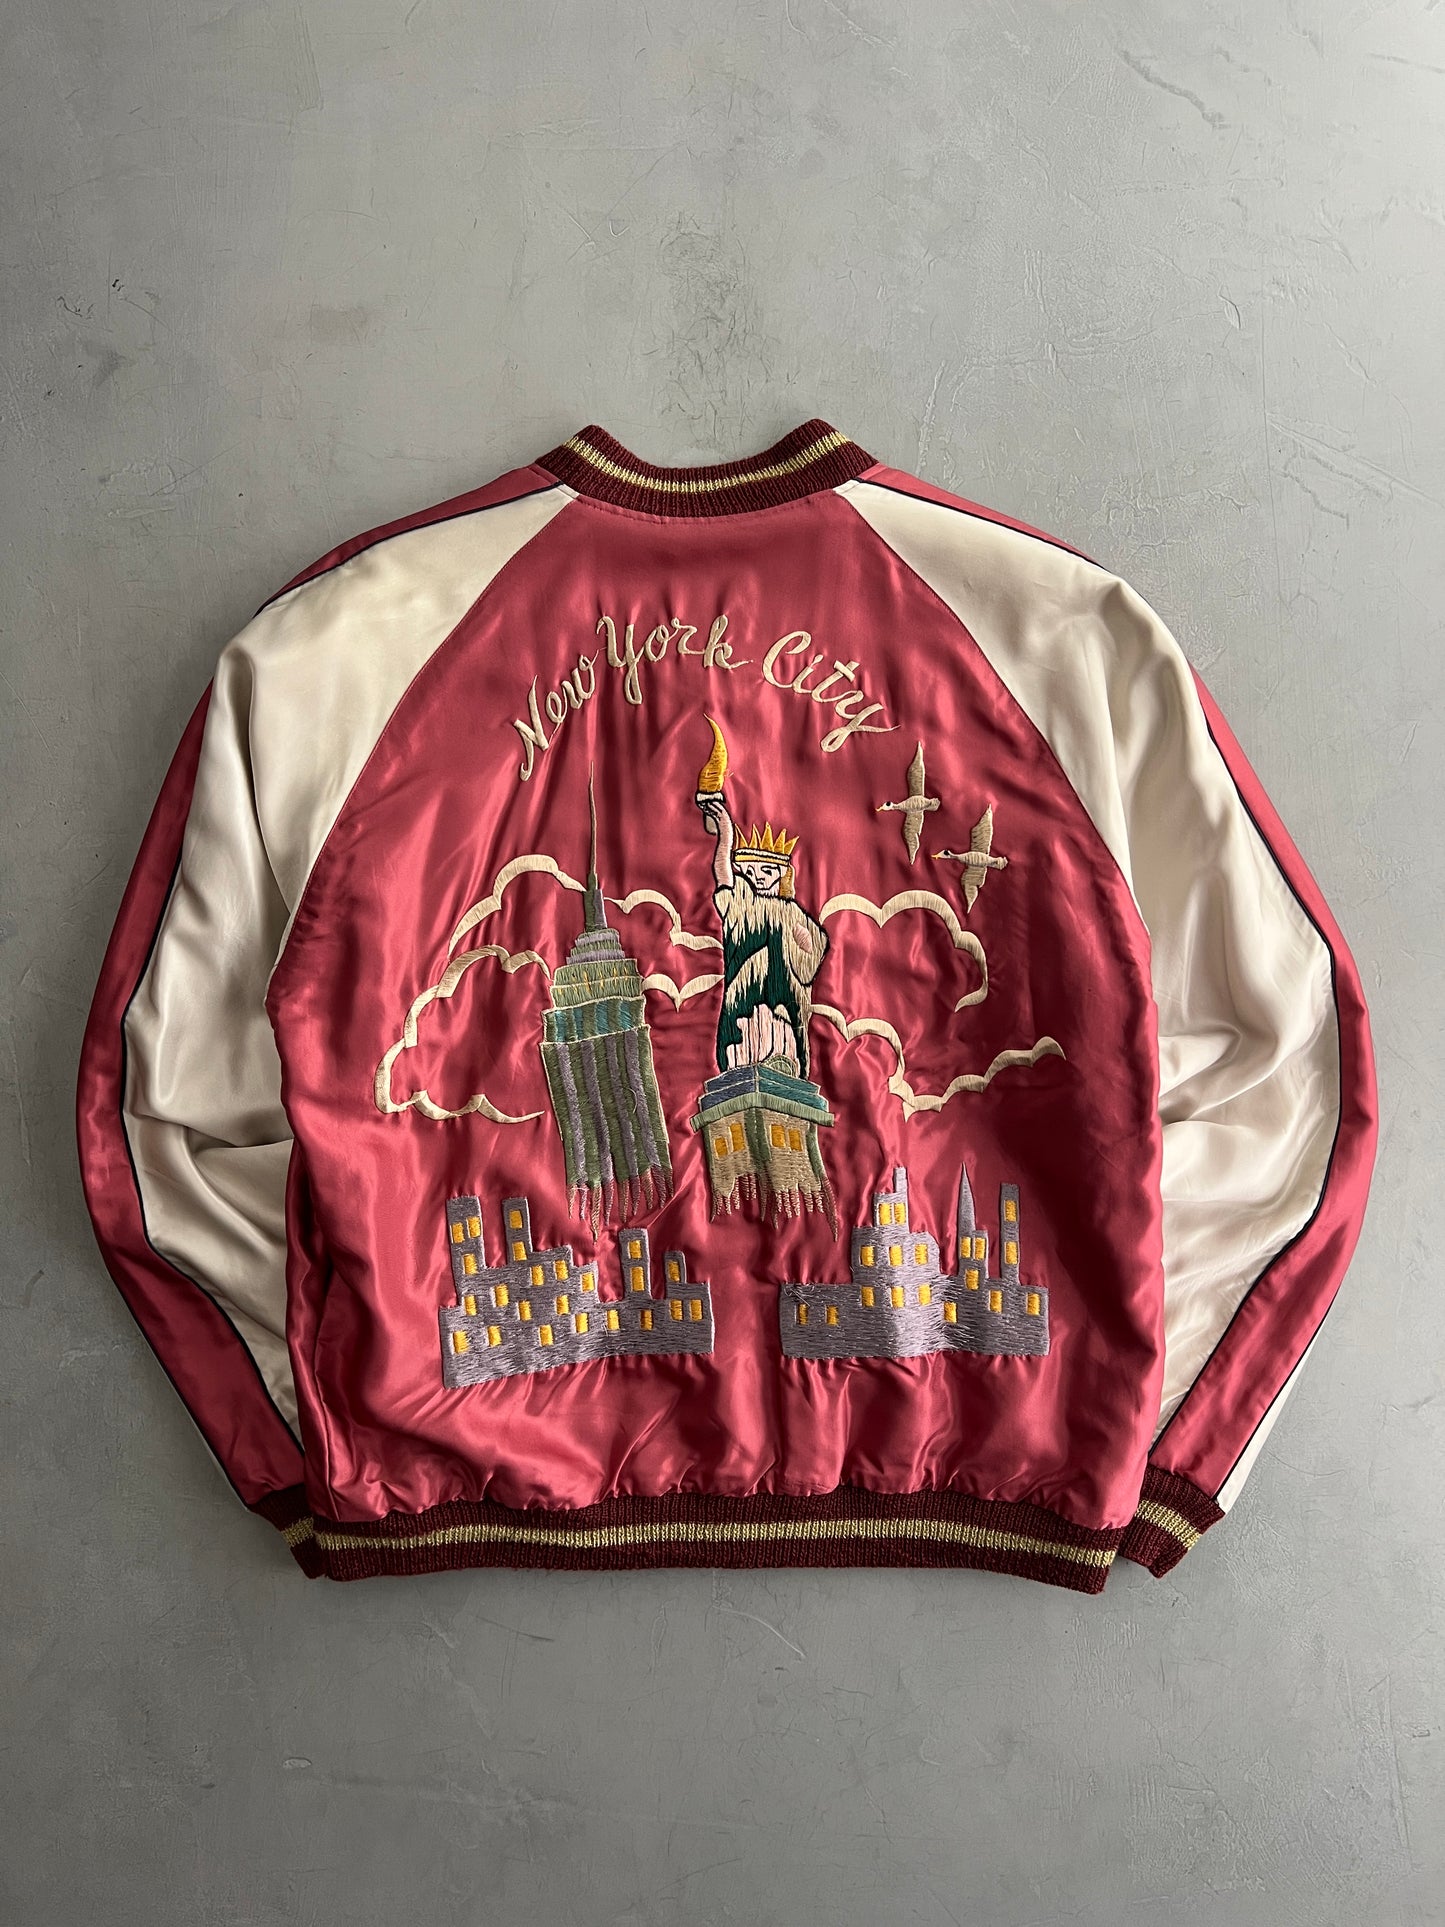 Tailor Toyo Japan/NYC Souvenir Jacket [L]